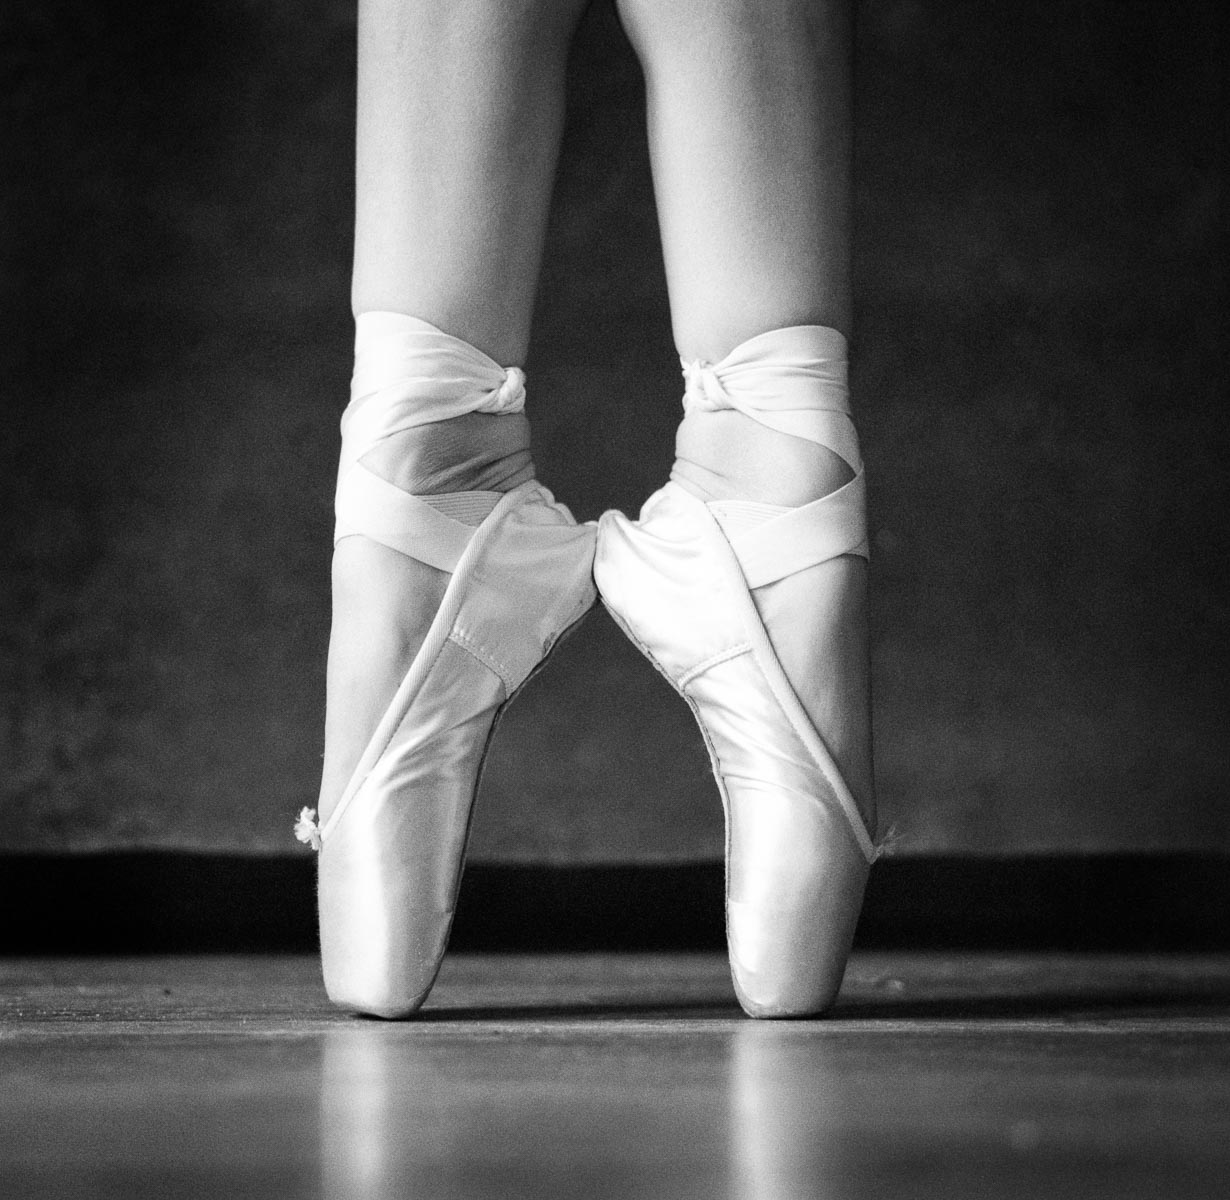 Image of ballerina Viktory by Simon Goodacre shot on ILFORD FP4 plus 4x5 black and white film